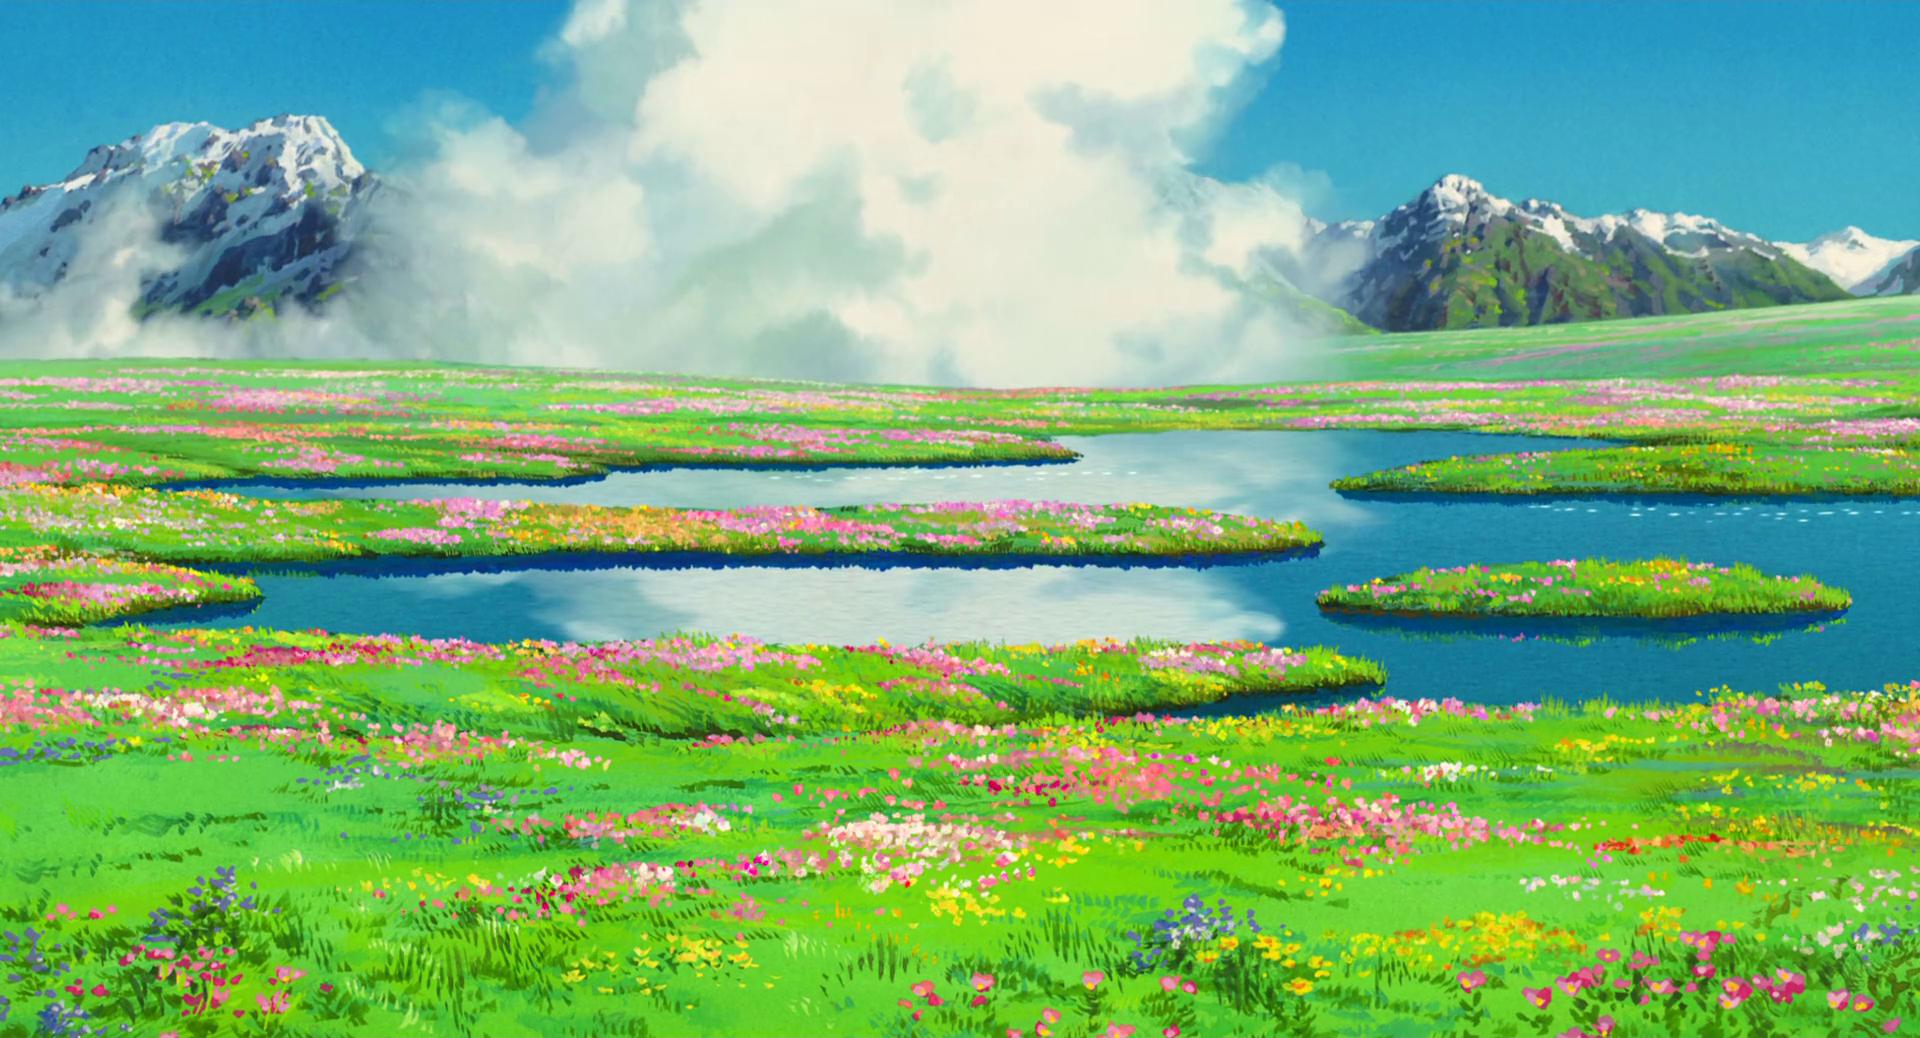 Wallpaper wednesday #3 - Studio Ghibli wallpapers